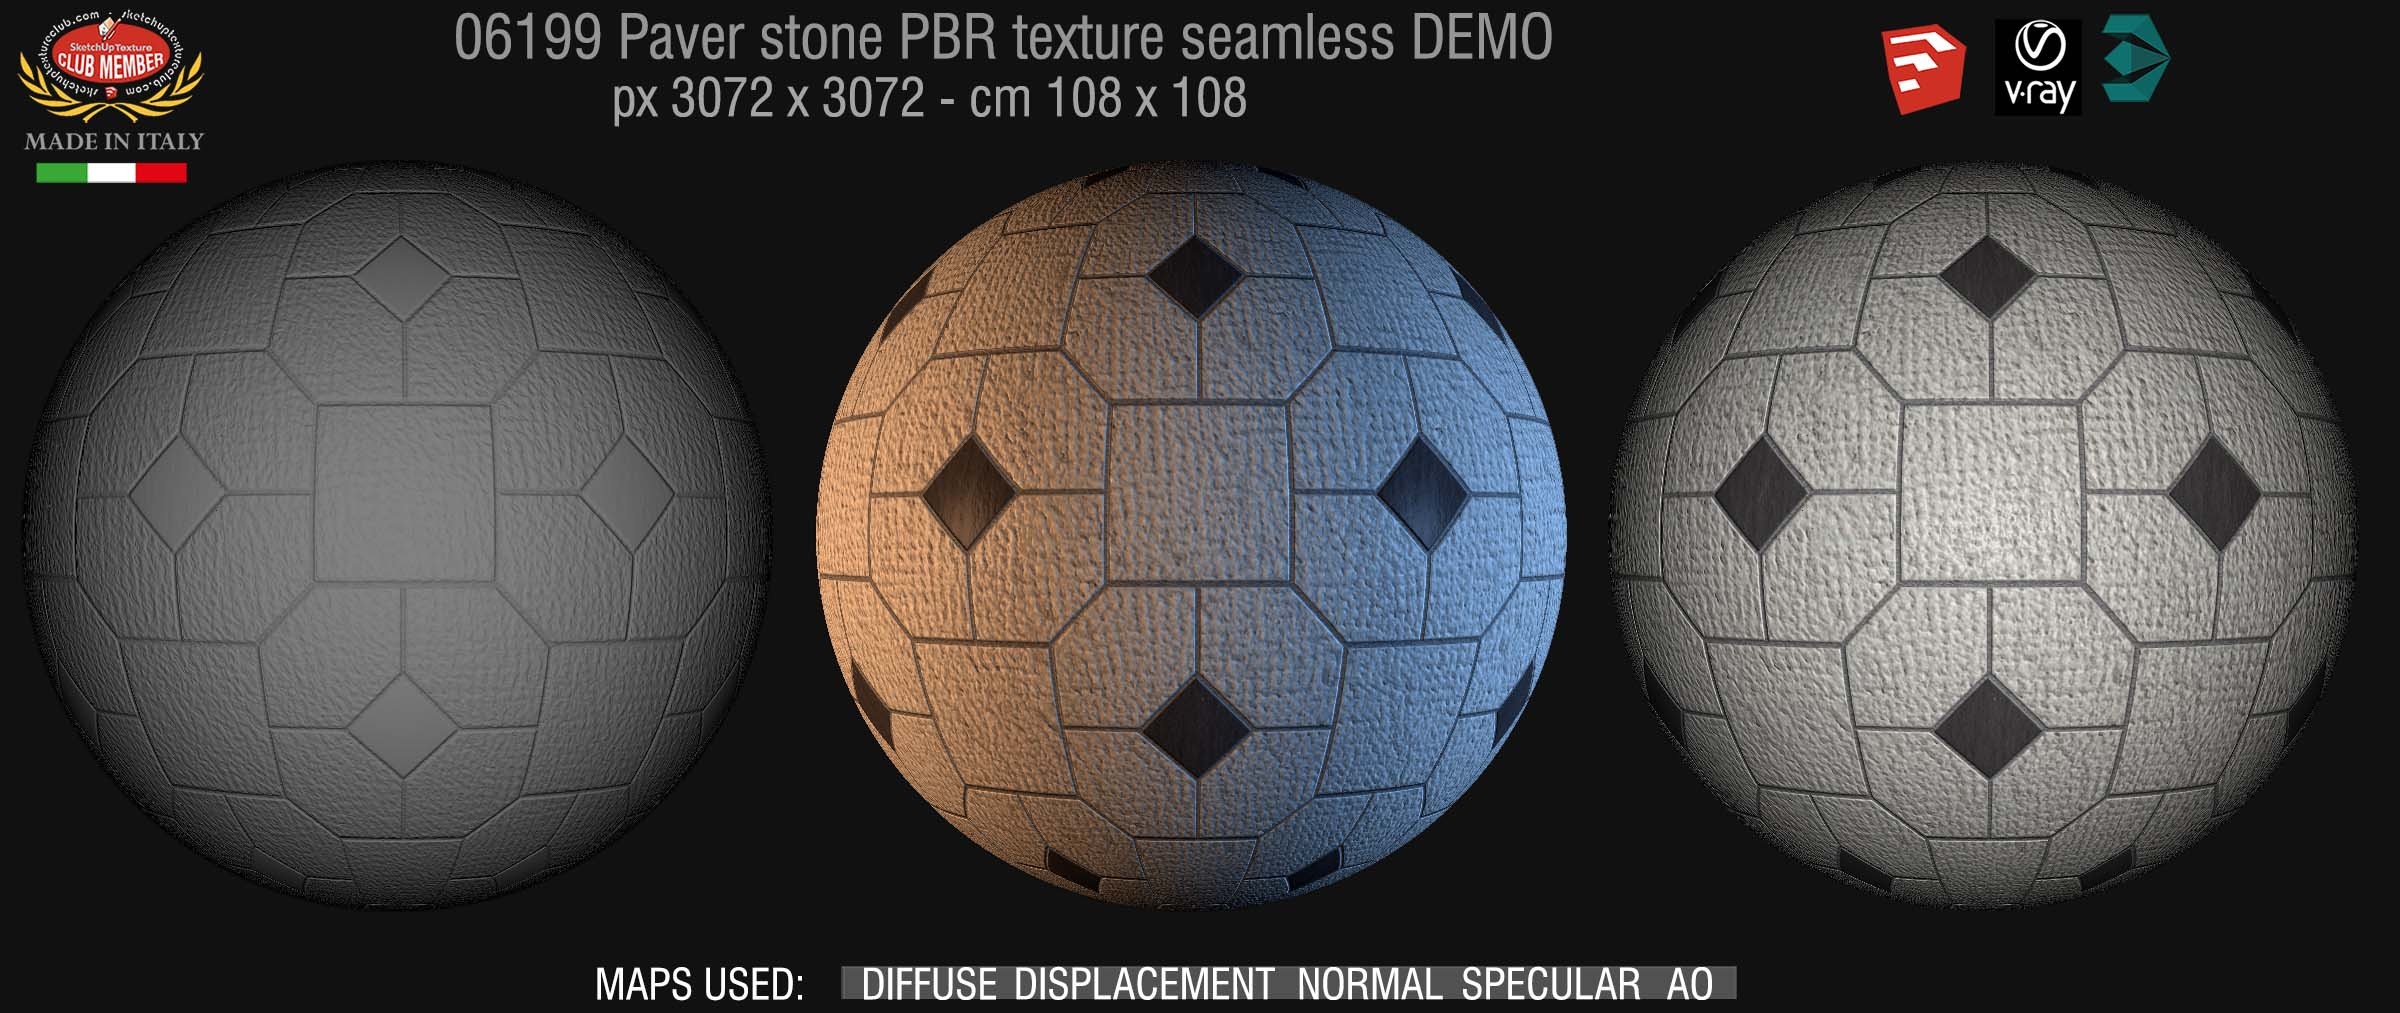 06199 Pavers stone PBR texture seamless DEMO